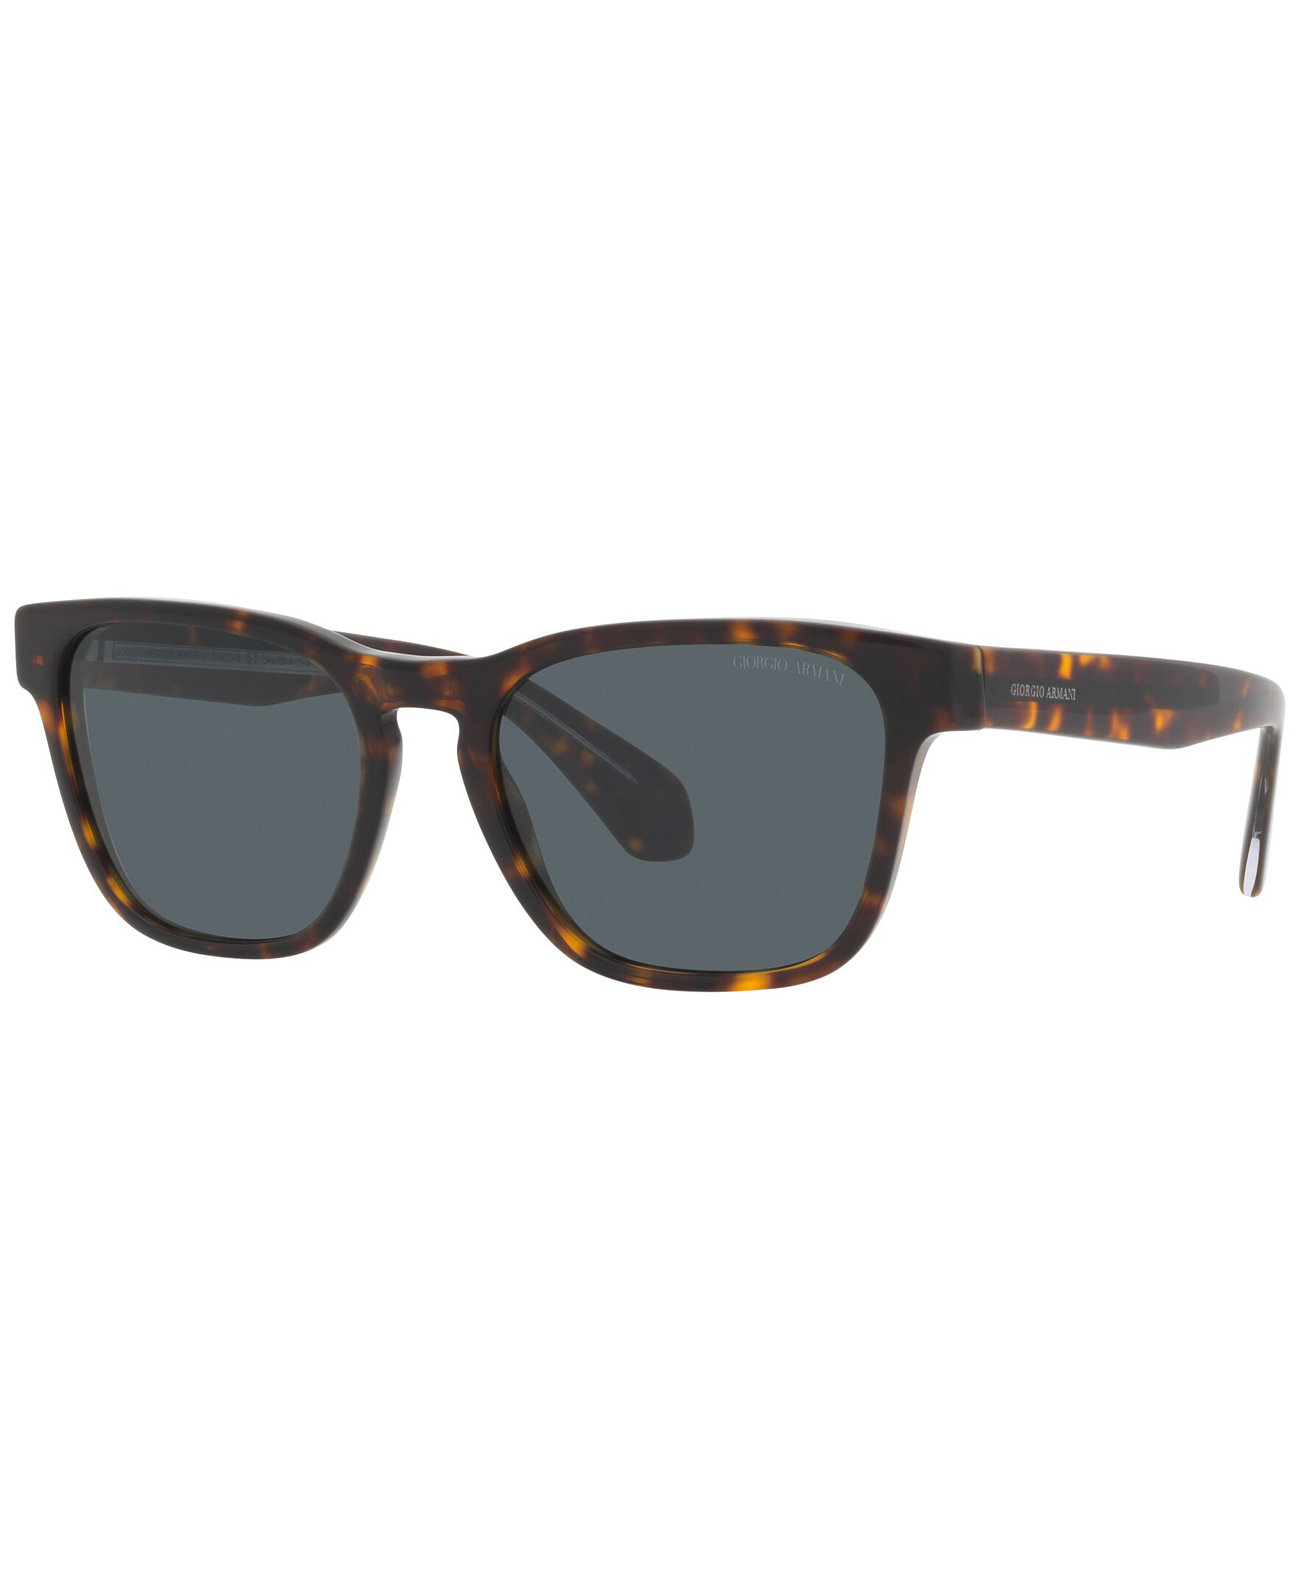 Мужские солнцезащитные очки, AR8155 55 Giorgio Armani